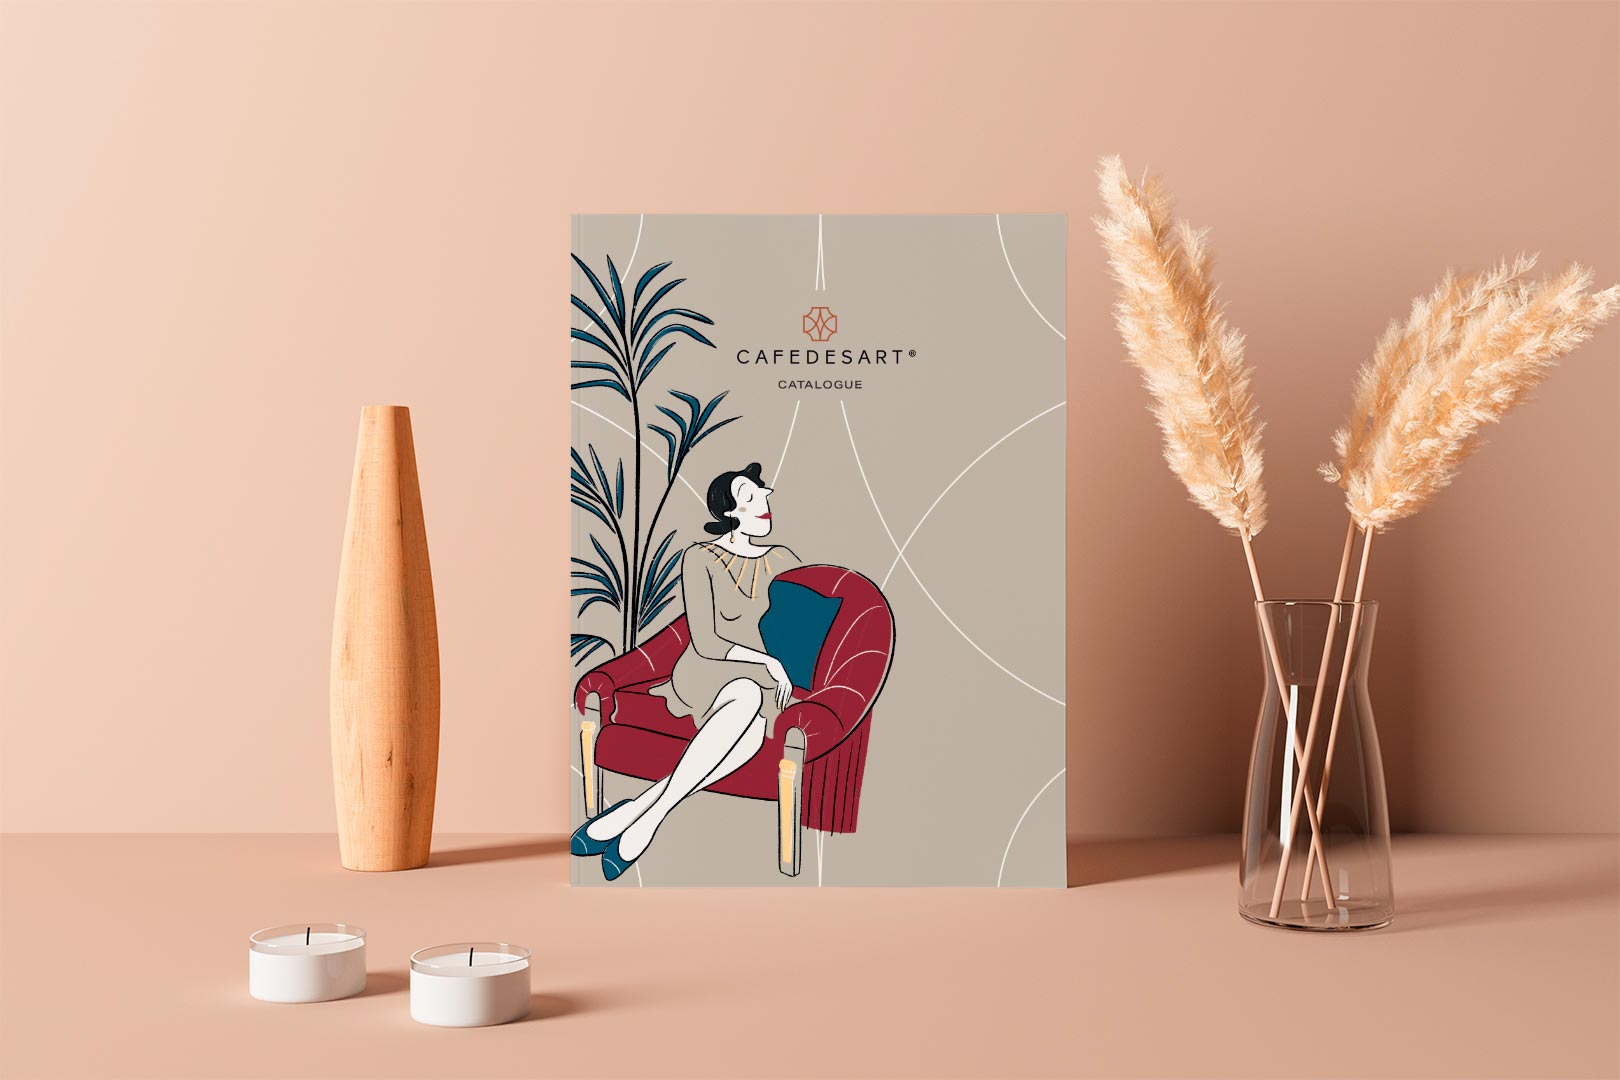 Cafedesart design catalogo